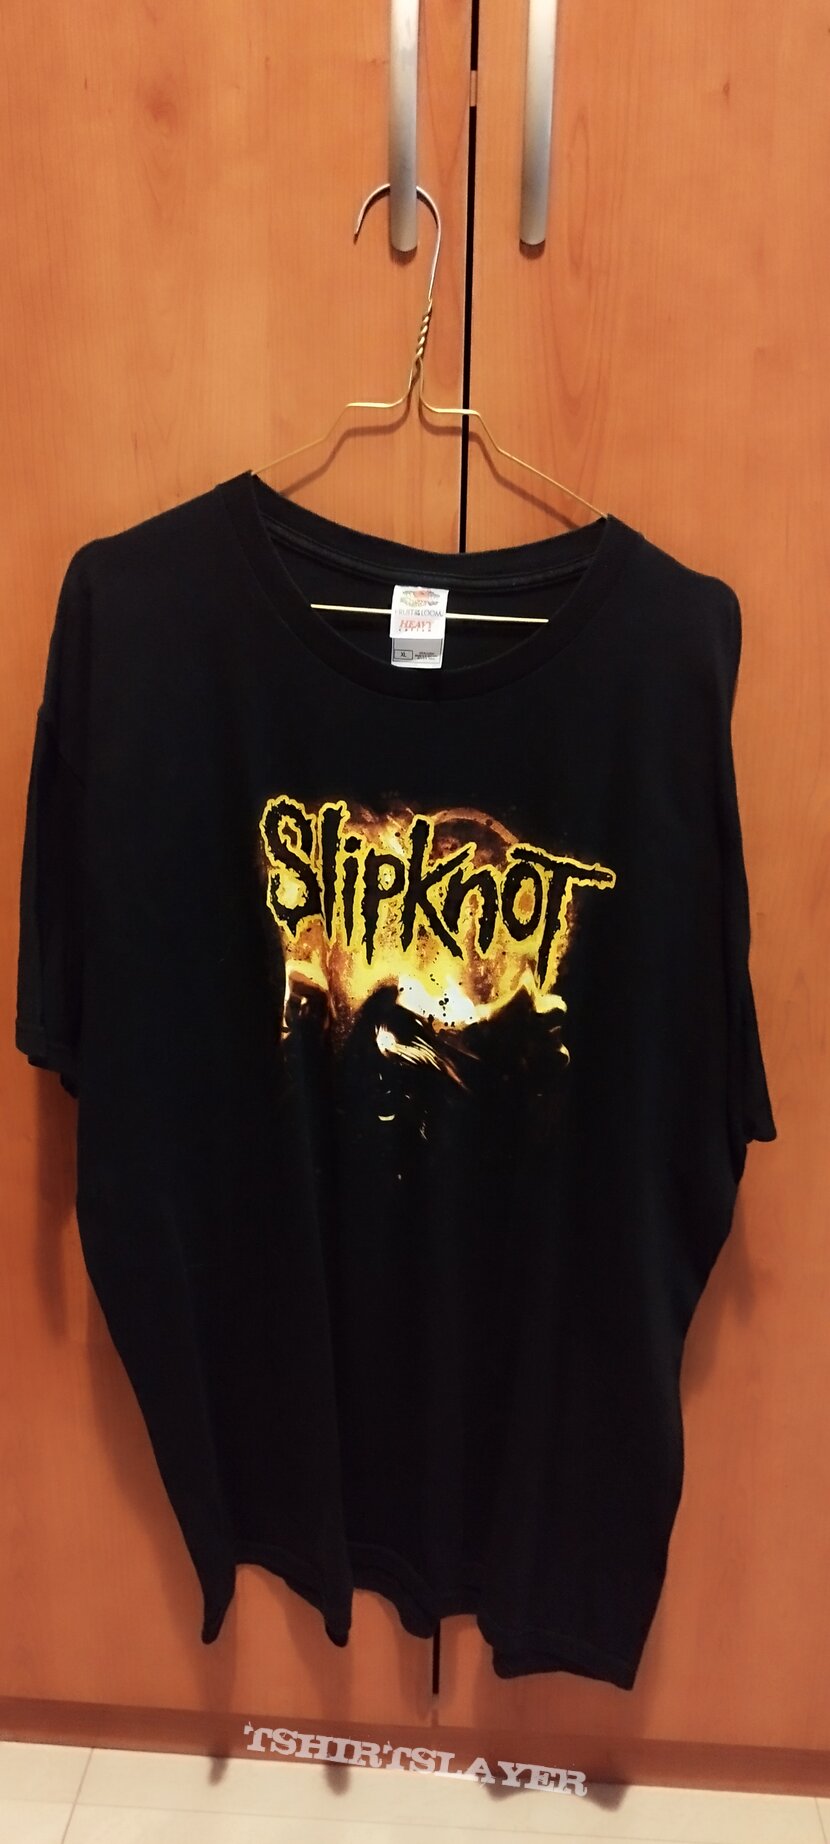 Original slipknot shirt